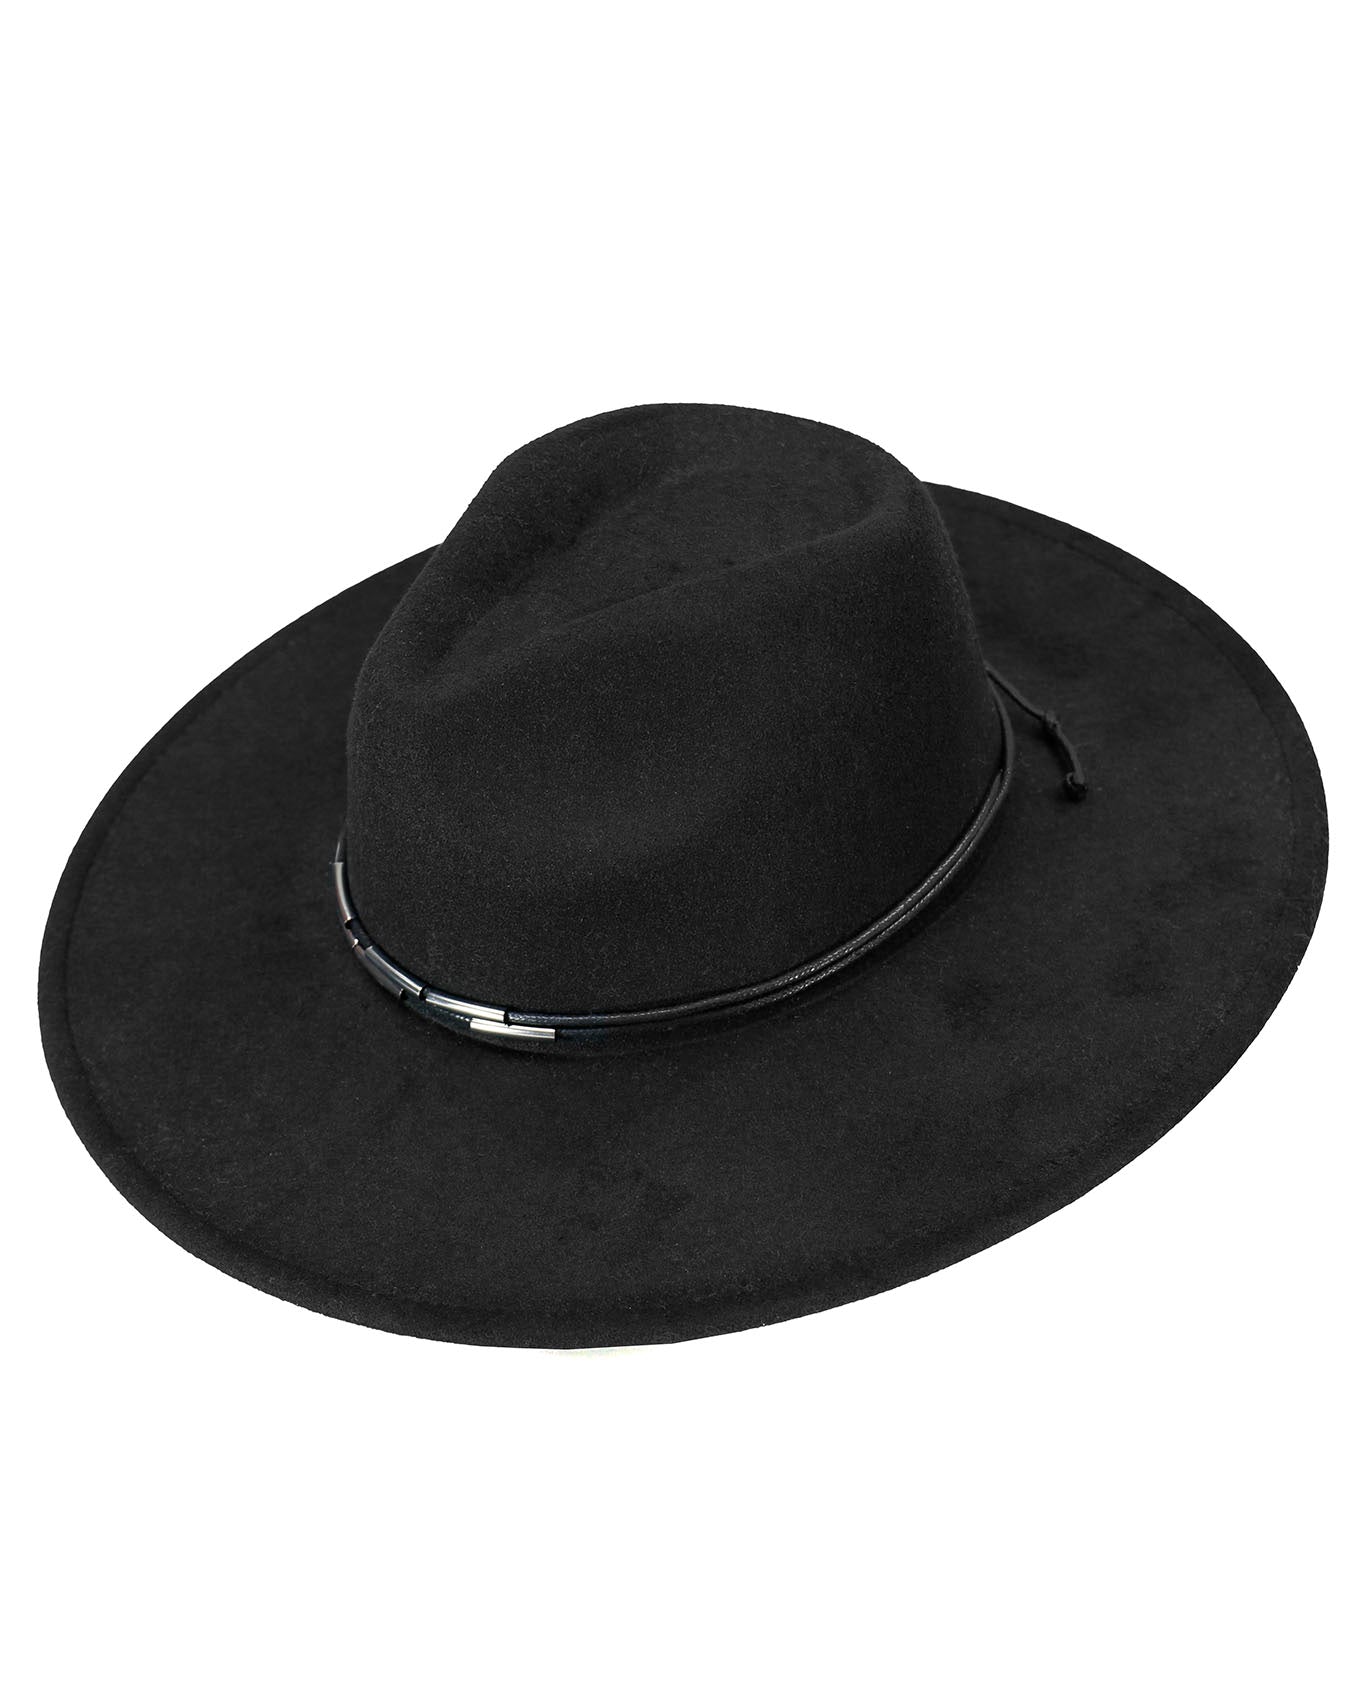 top view stock shot of wide brim felt hat in black